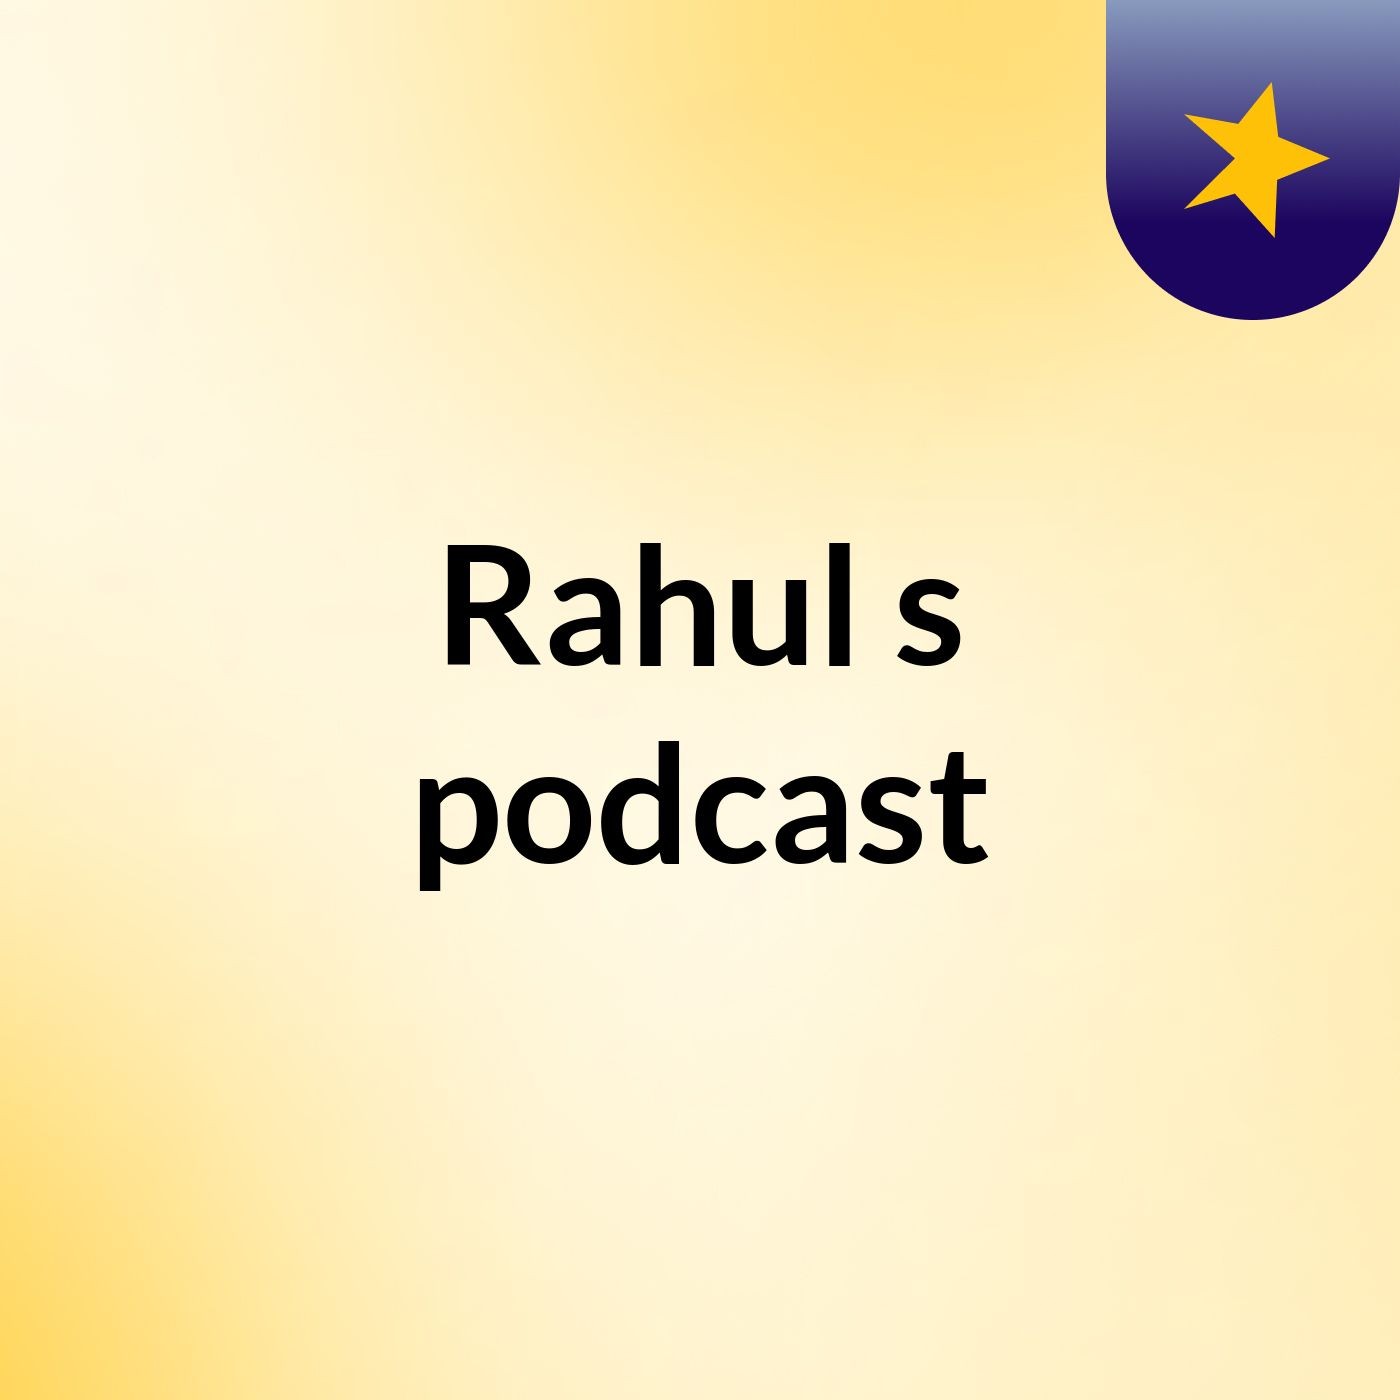 Rahul's podcast